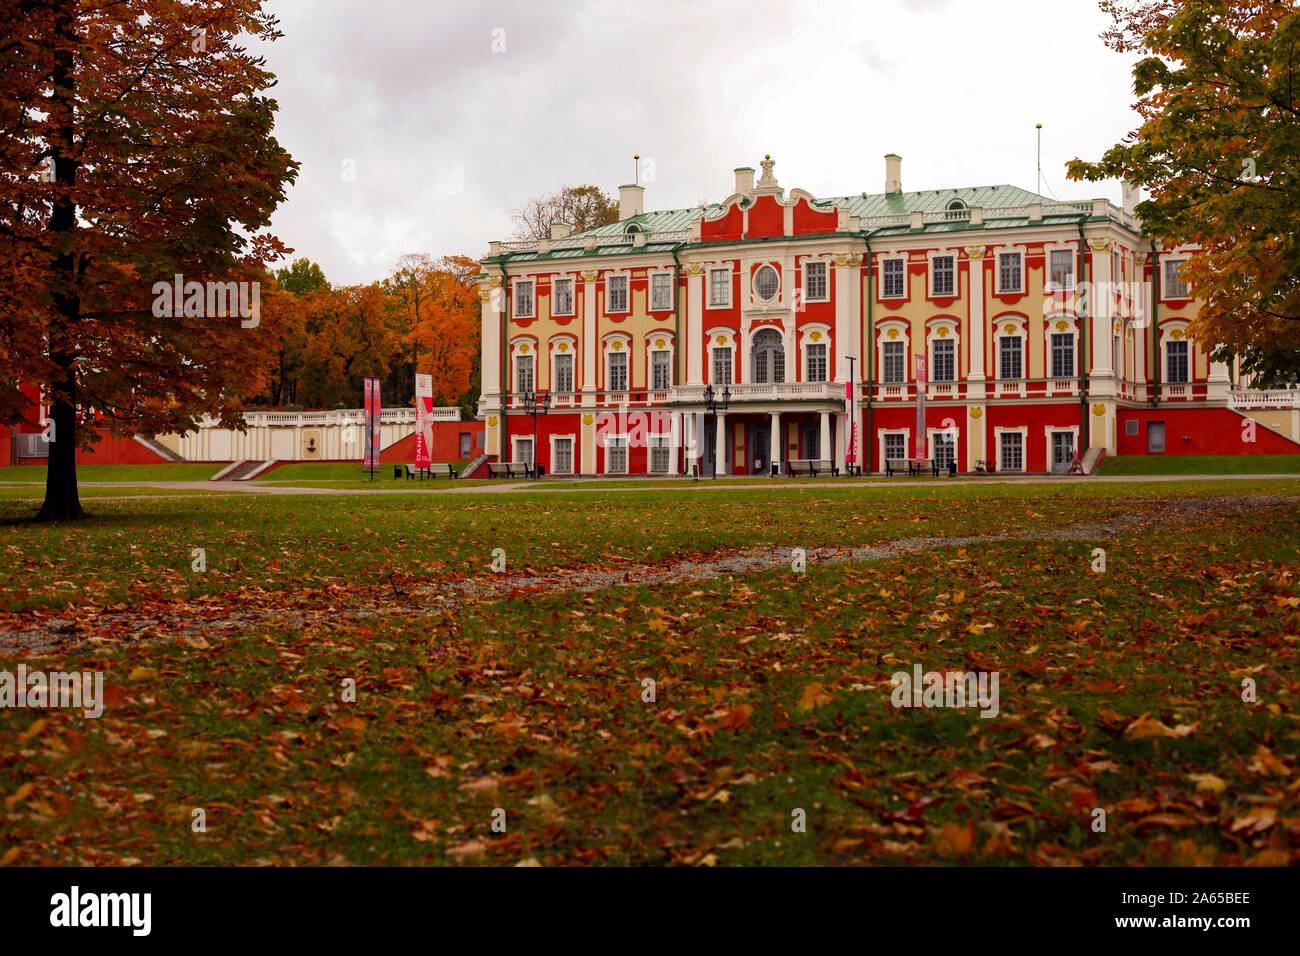 TALLINN, Estland - 6. Oktober 2019. President Palace. Das barocke Gebäude namens Kadriorg Palast wurde von Zar Peter dem Großen im 18. Jahrhundert Stockfoto